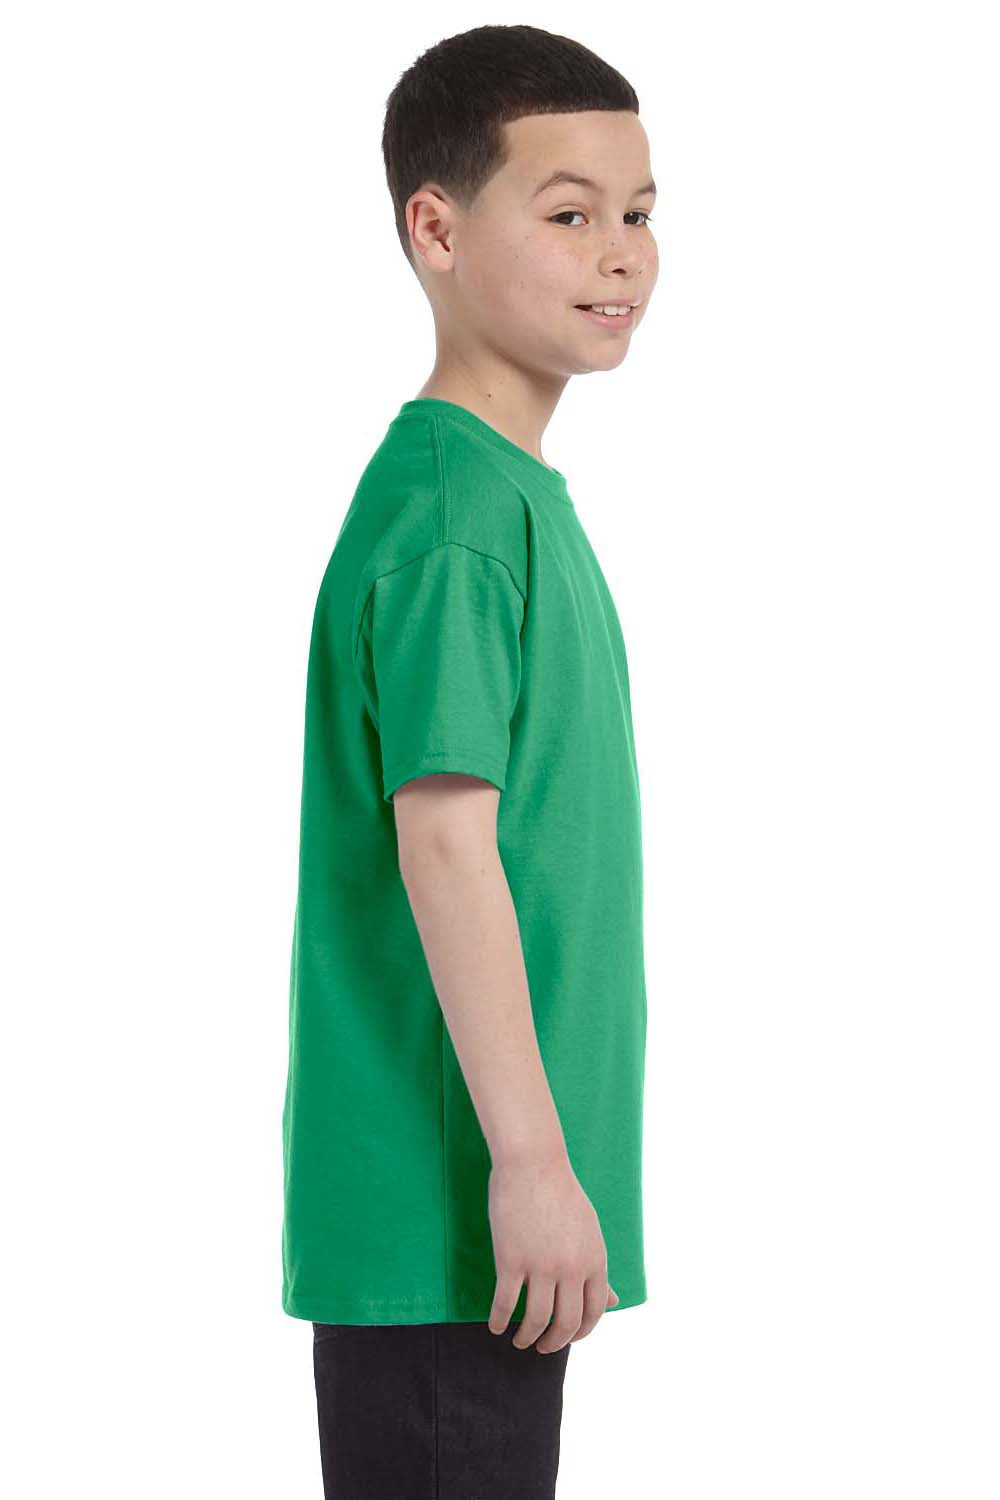 Jerzees 29B Youth Dri-Power Moisture Wicking Short Sleeve Crewneck T-Shirt Kelly Green Side